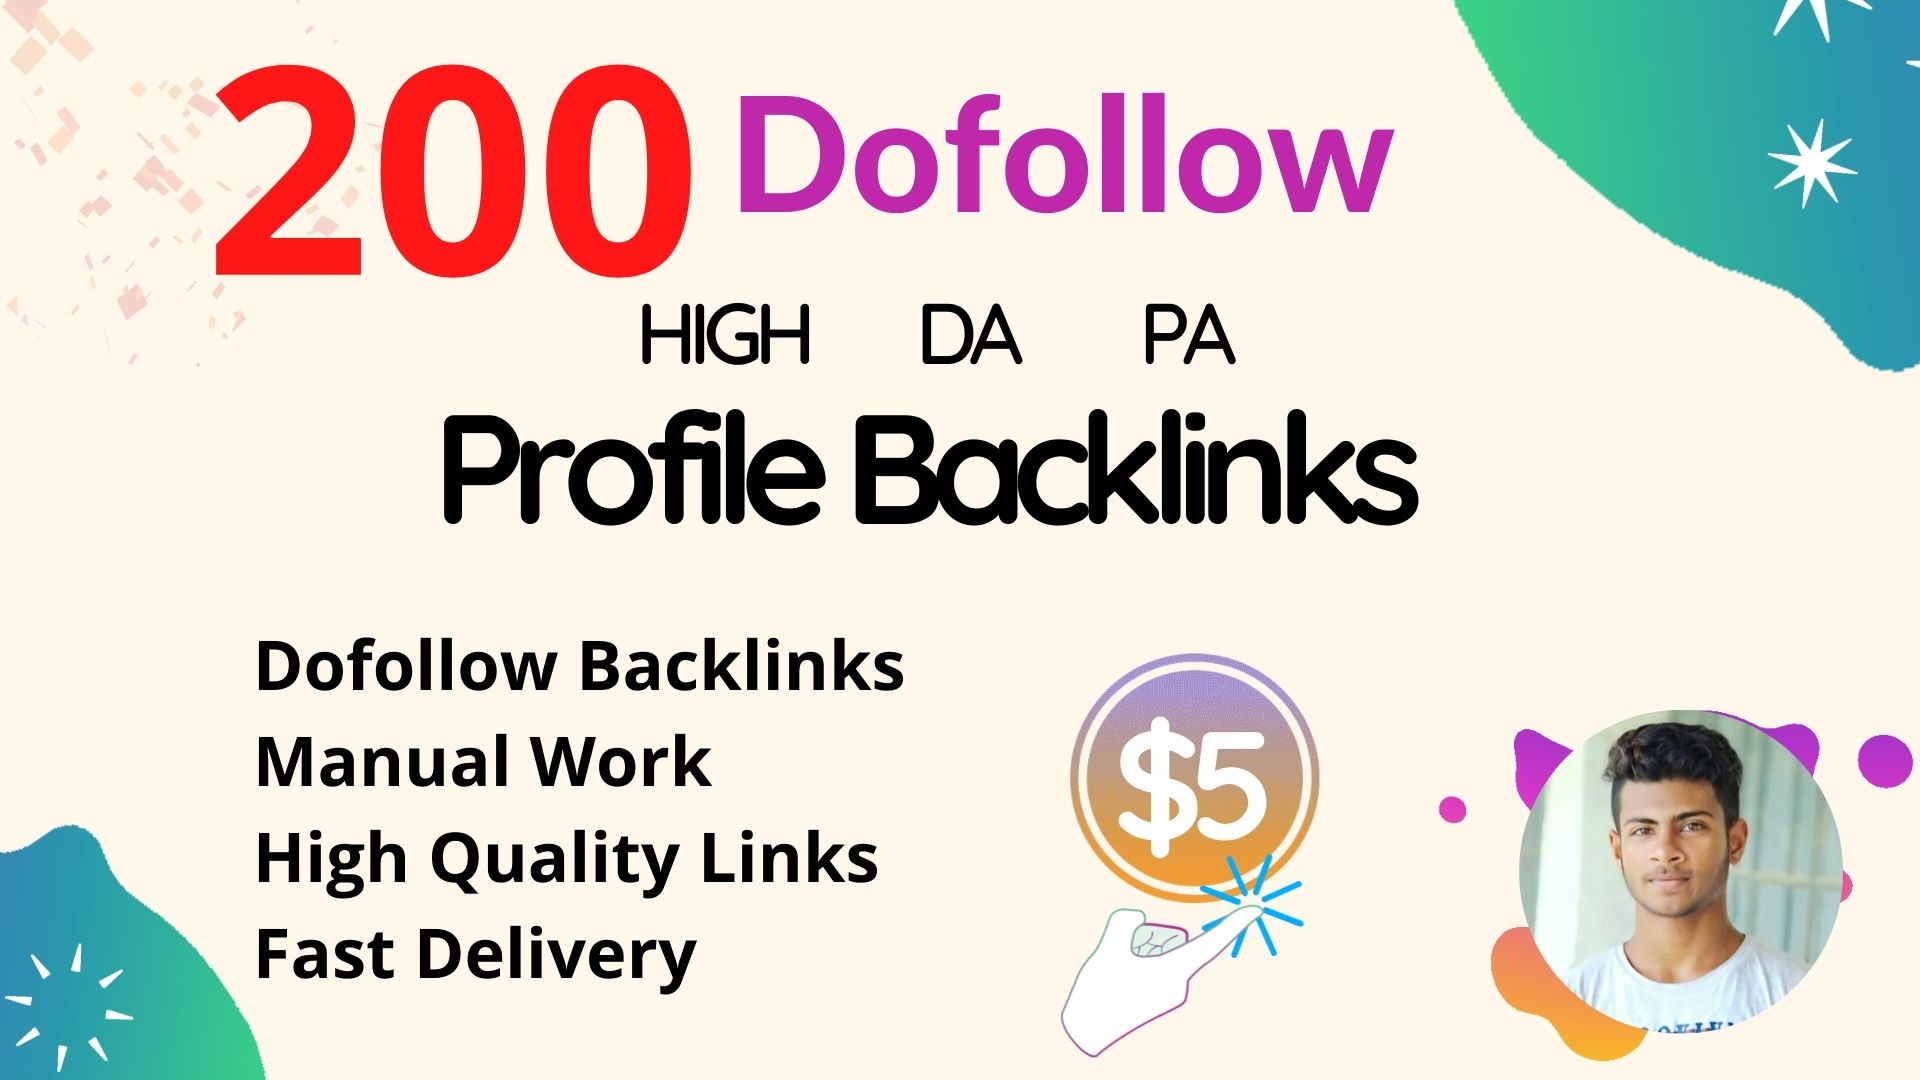 I will do 200 high da profile backlinks manually within 24 hours